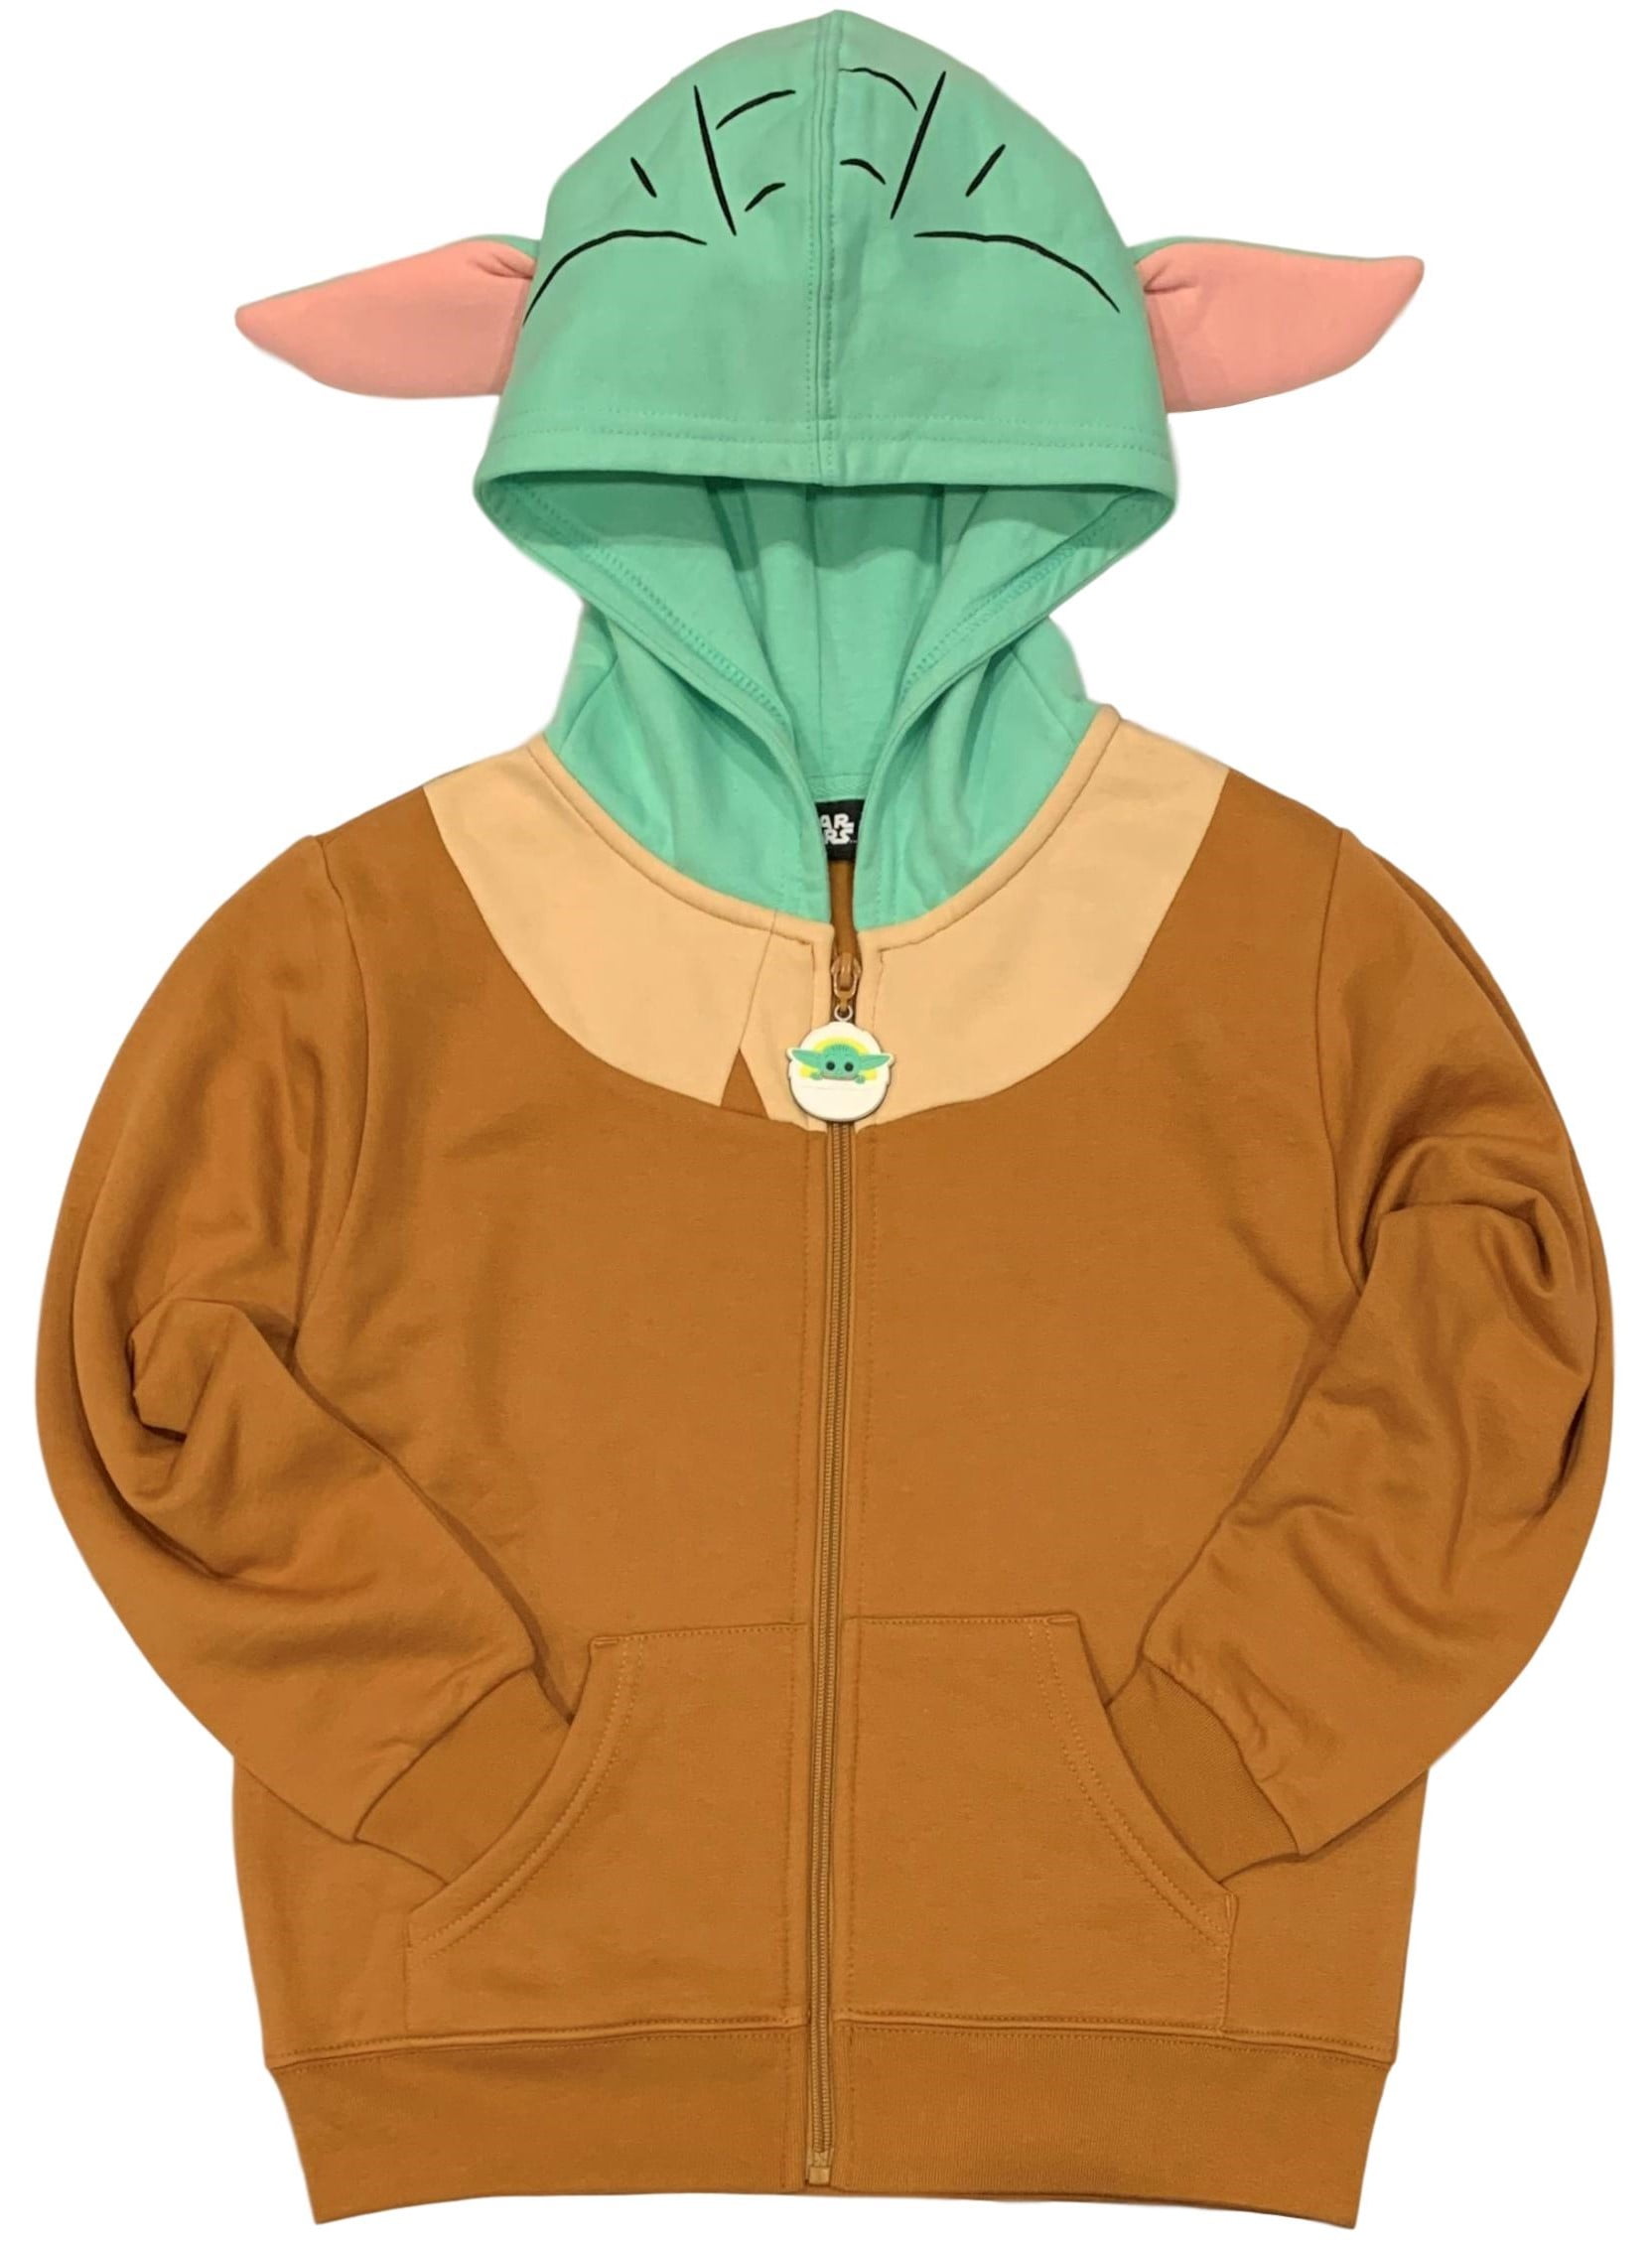 Details about   Star Wars Disney Yoda Full Zip Sweatshirt Hoodie Boys Size 6 NWT Yoda Head Ears 